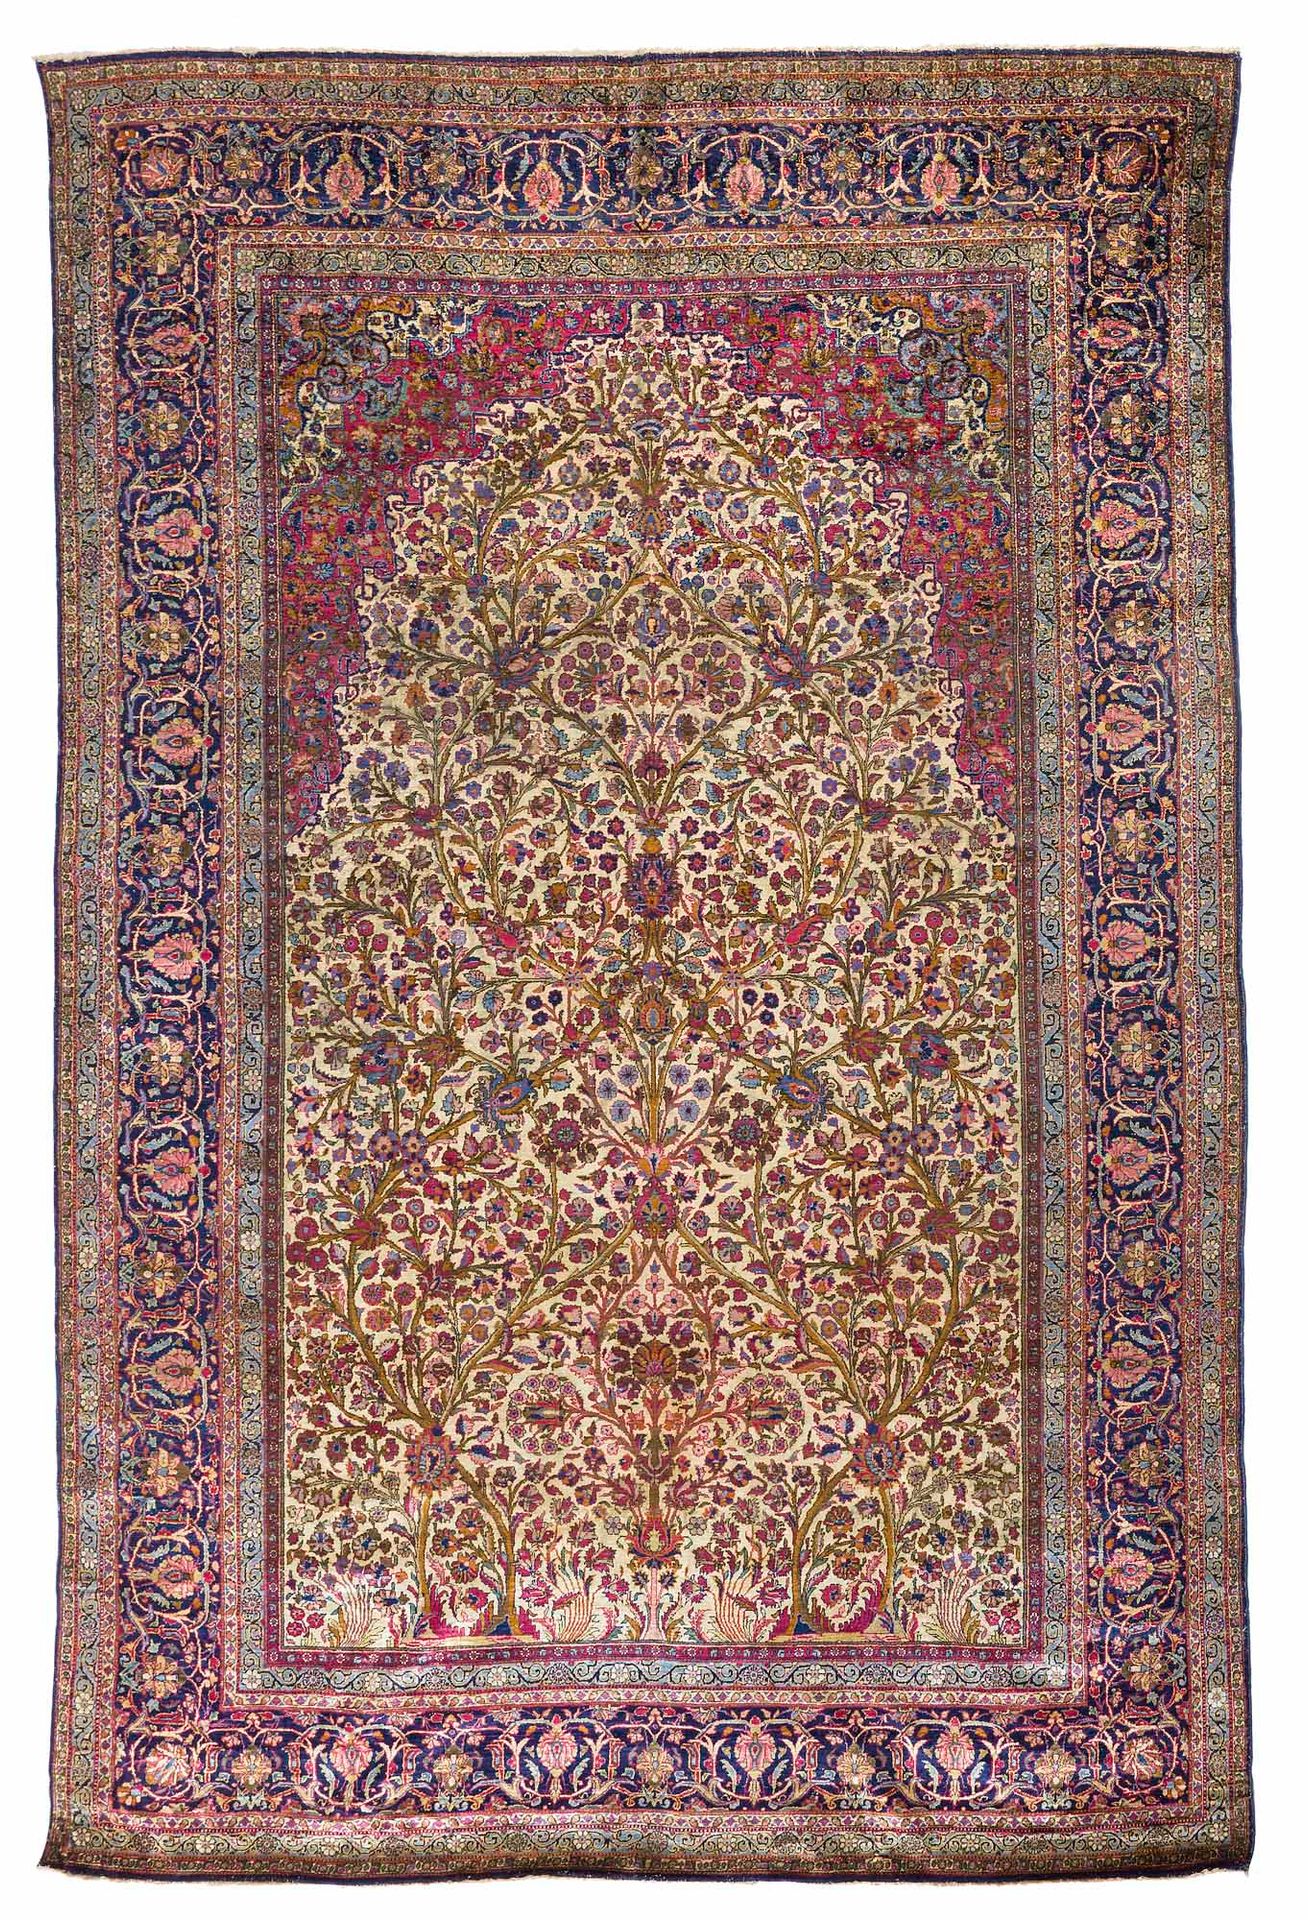 Null Tapis KACHAN en Soie (Perse), fin du 19e siècle

Dimensions : 305 x 210cm.
&hellip;